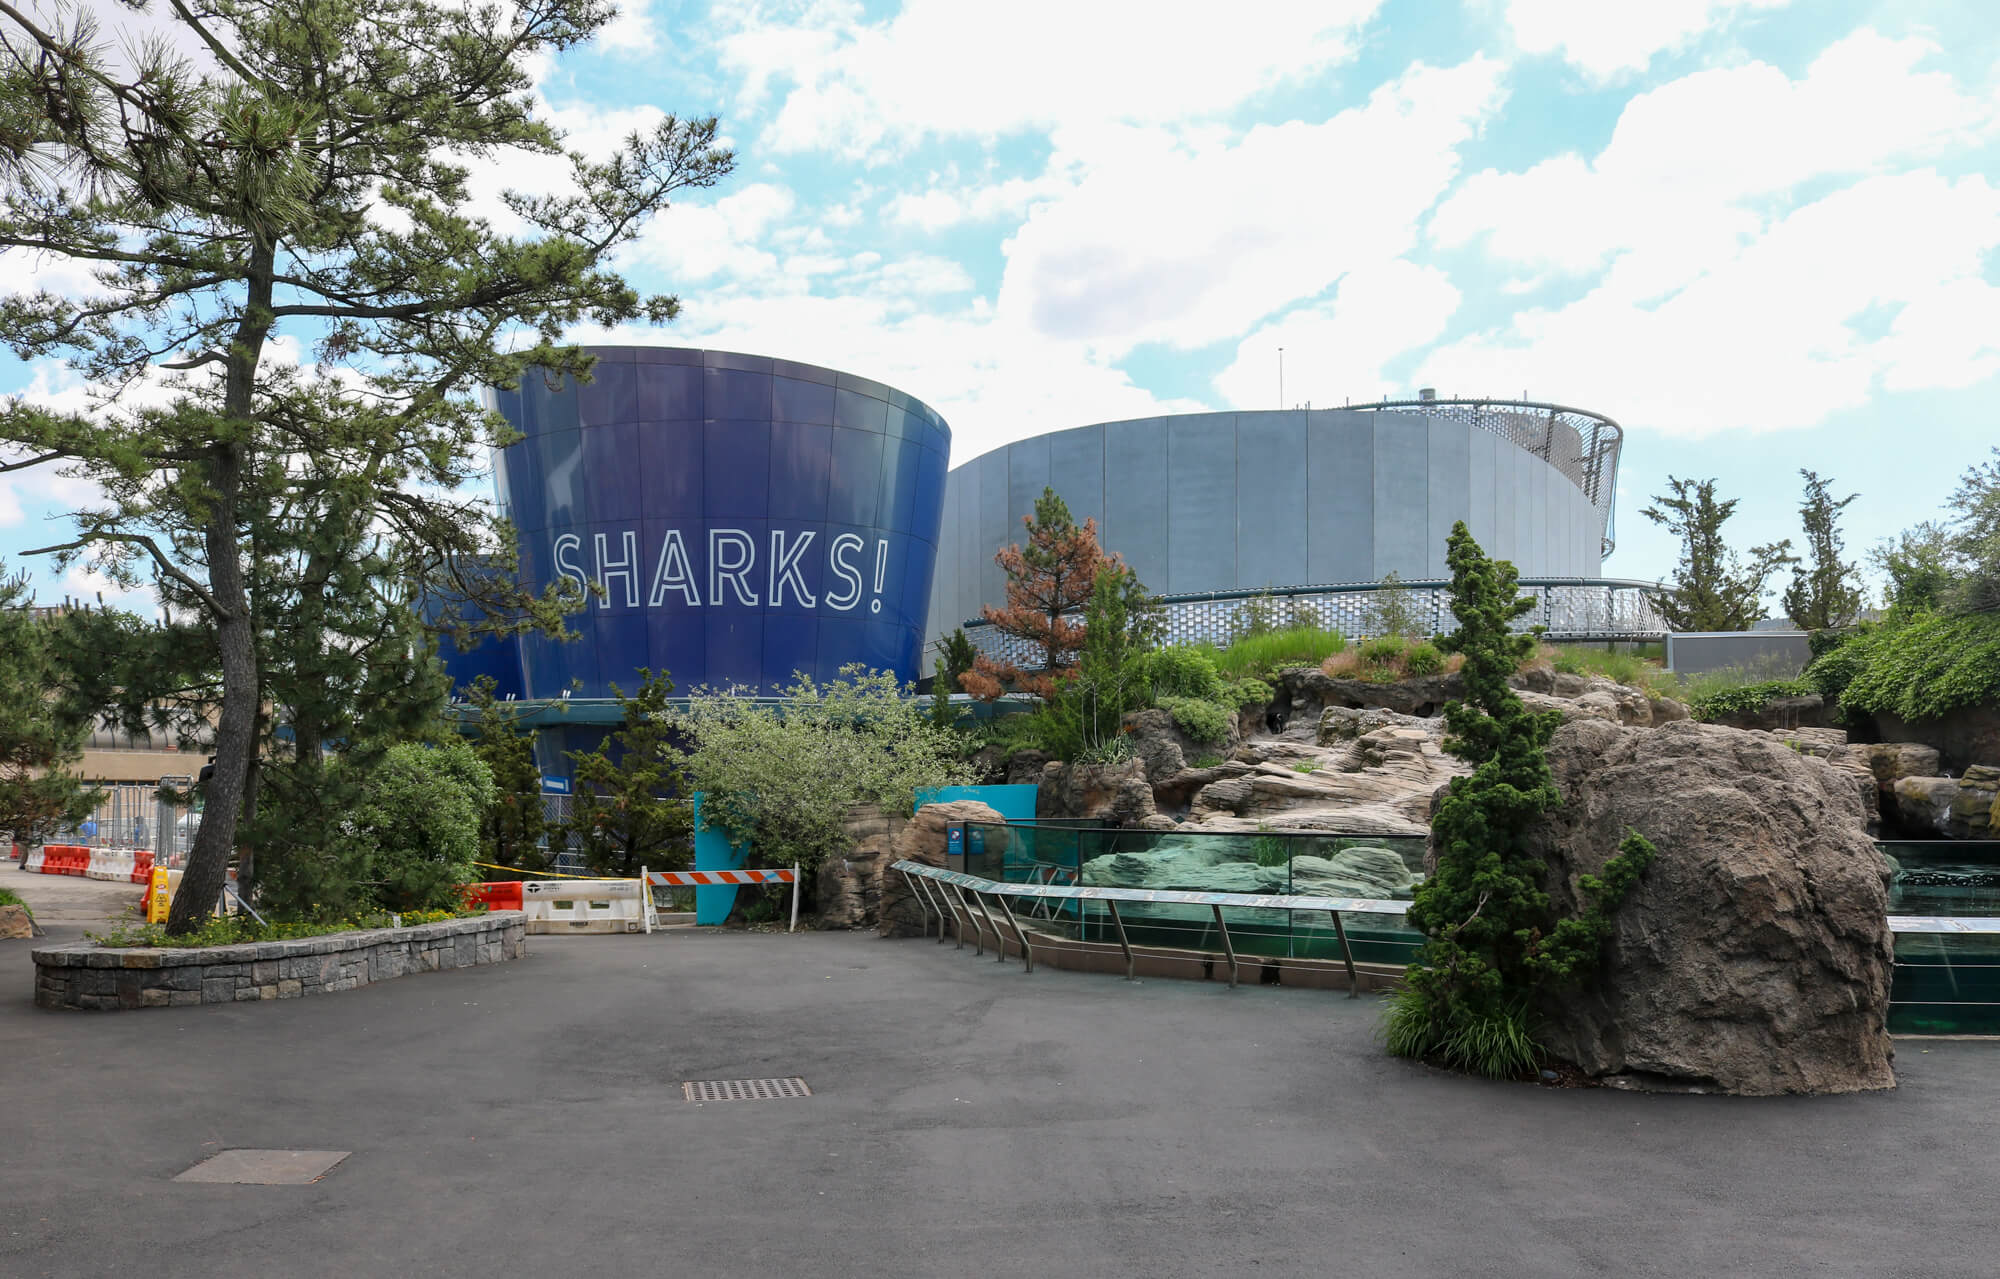 new york aquarium coney island sharks